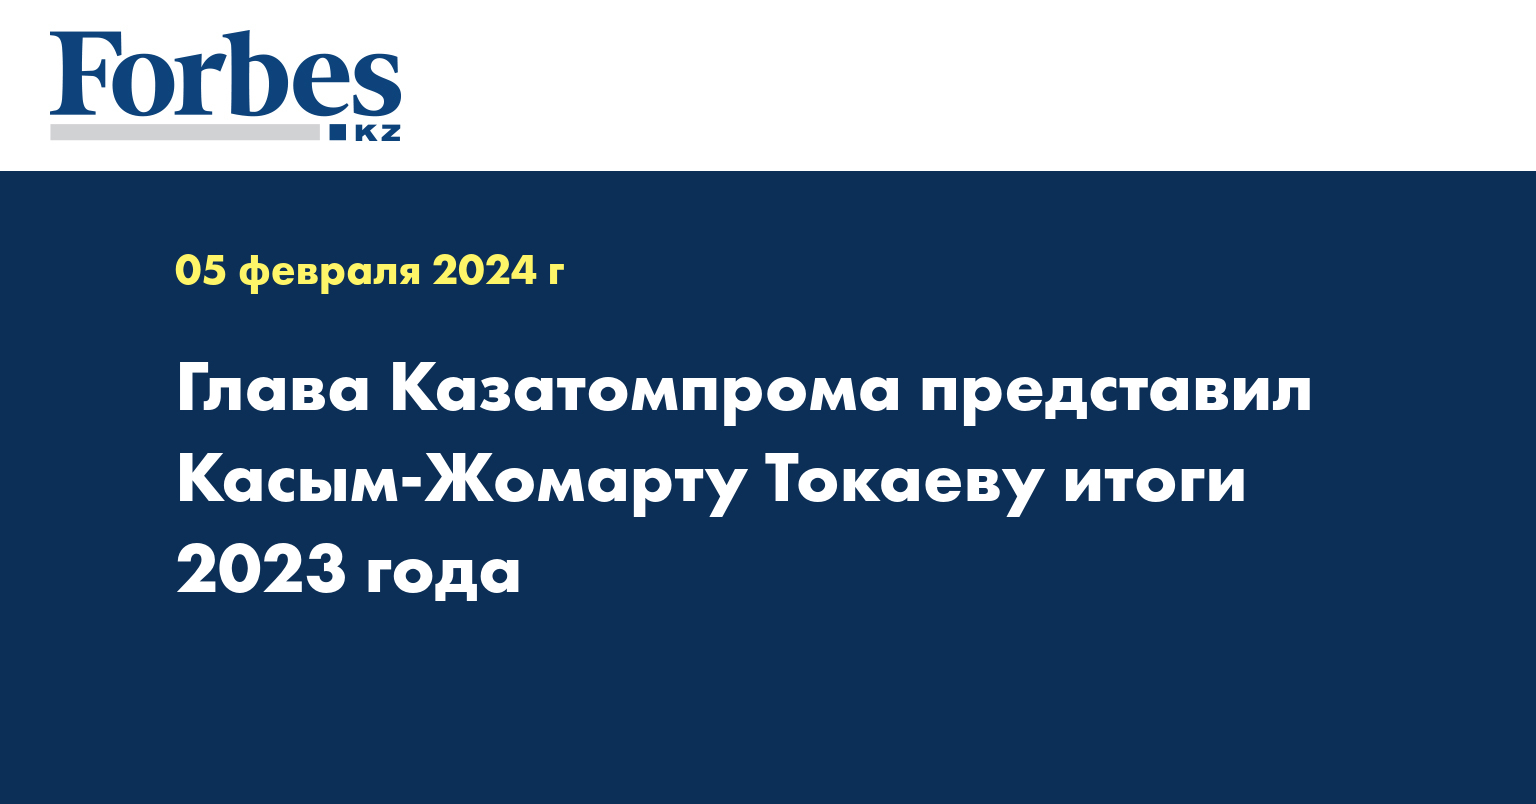 Глава «Казатомпрома» представил Касым-Жомарту Токаеву итоги 2023 года